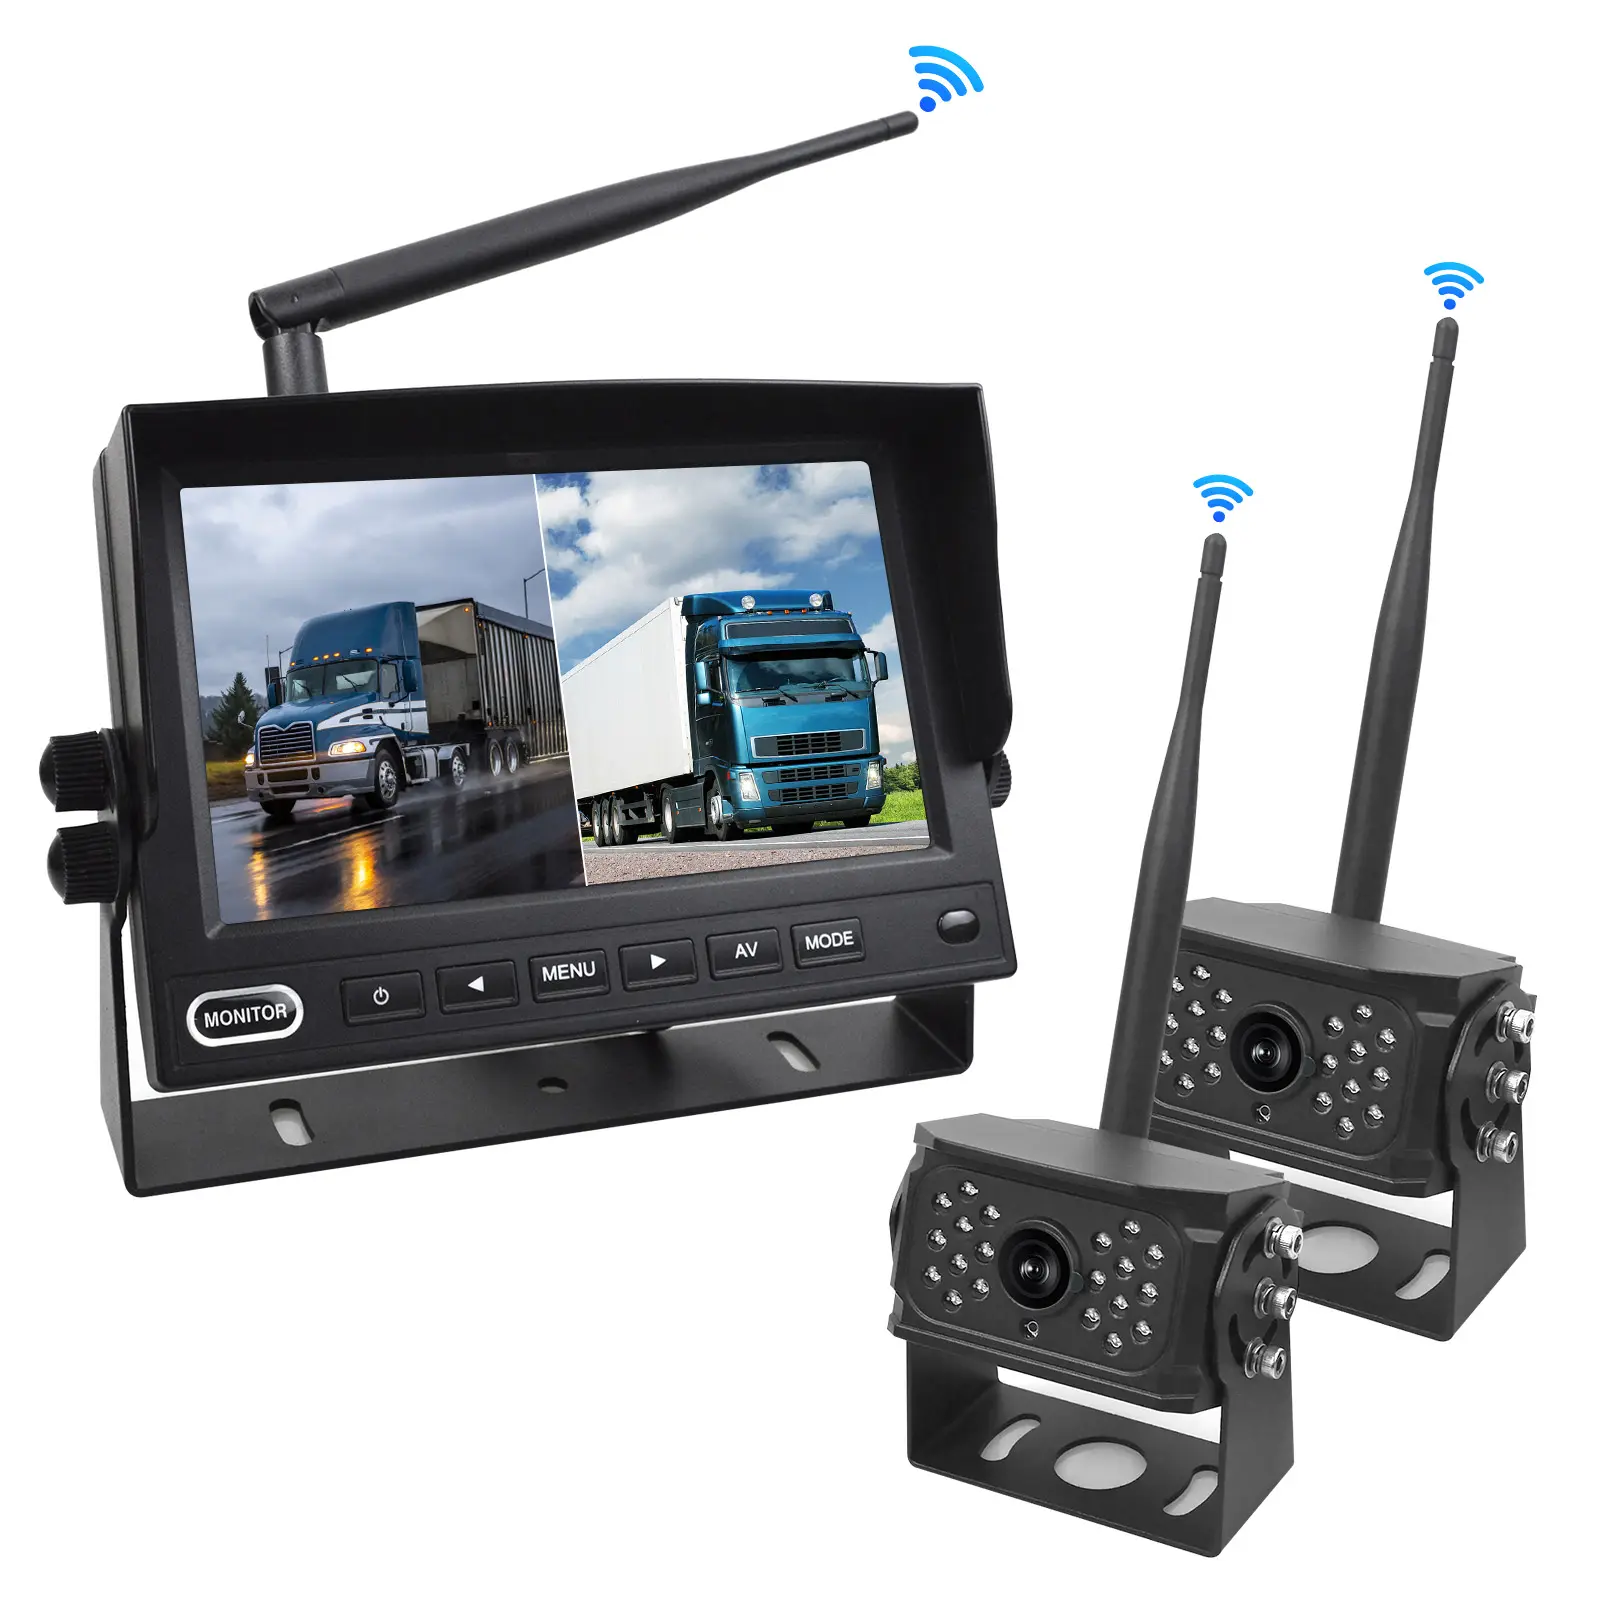 Sistema de cámara de seguridad inalámbrica para coche 2CH Split 7 pulgadas coche IPS pantalla Monitor visión nocturna cámara de respaldo inverso para camión